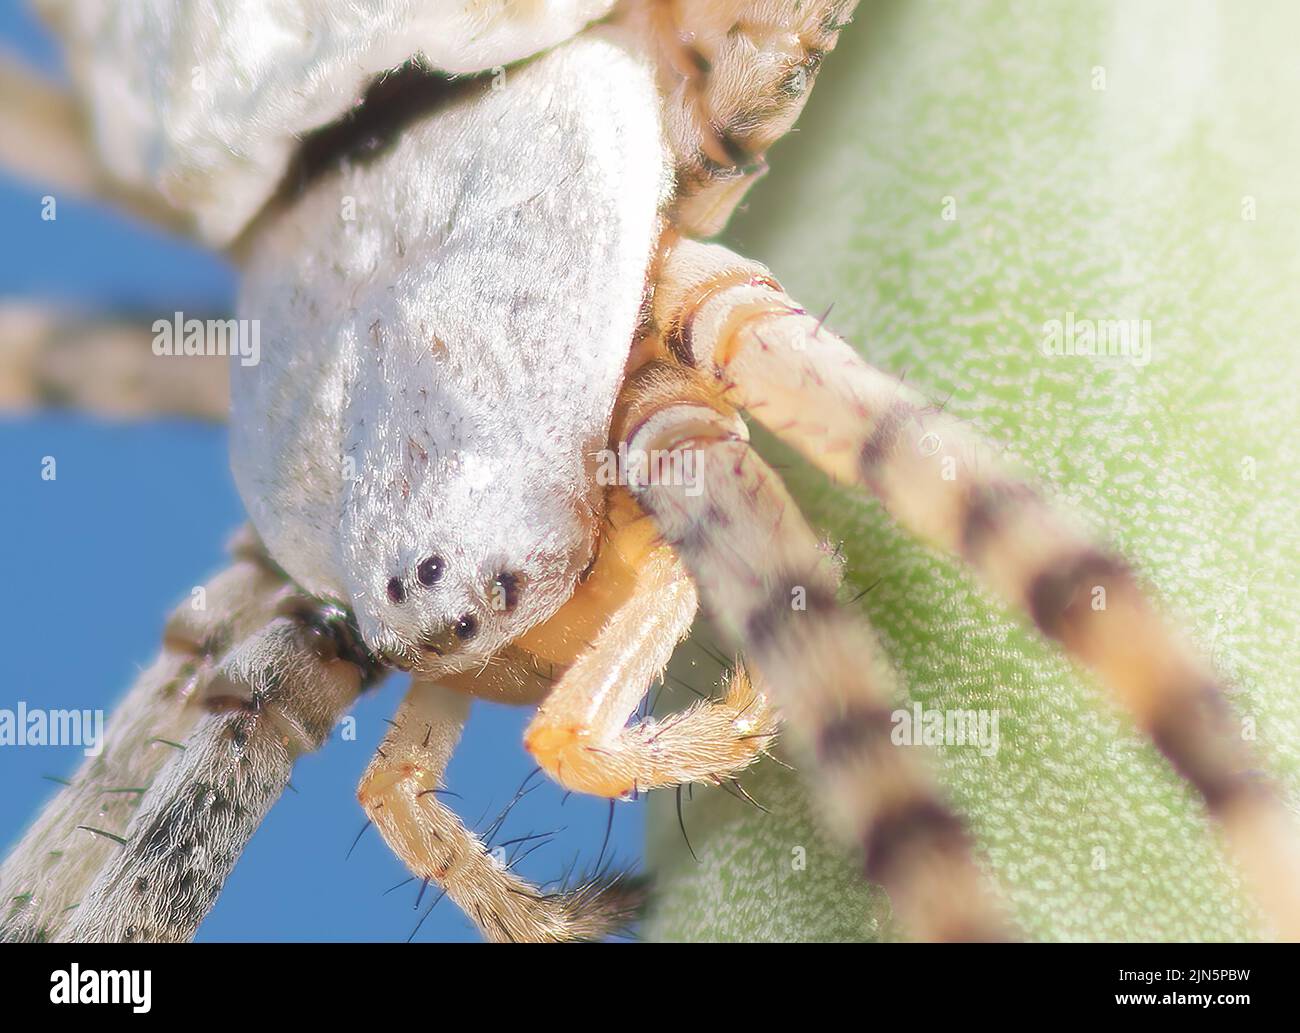 Argiope Lobada spider extreme close up. Macro photo. Stock Photo